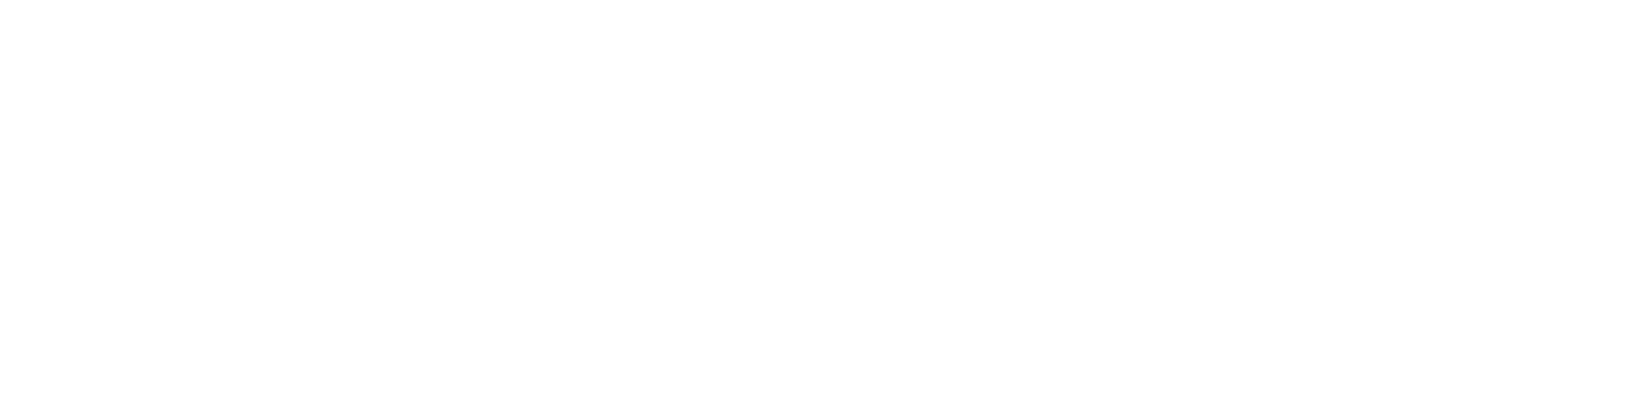 mipcom cannes logo